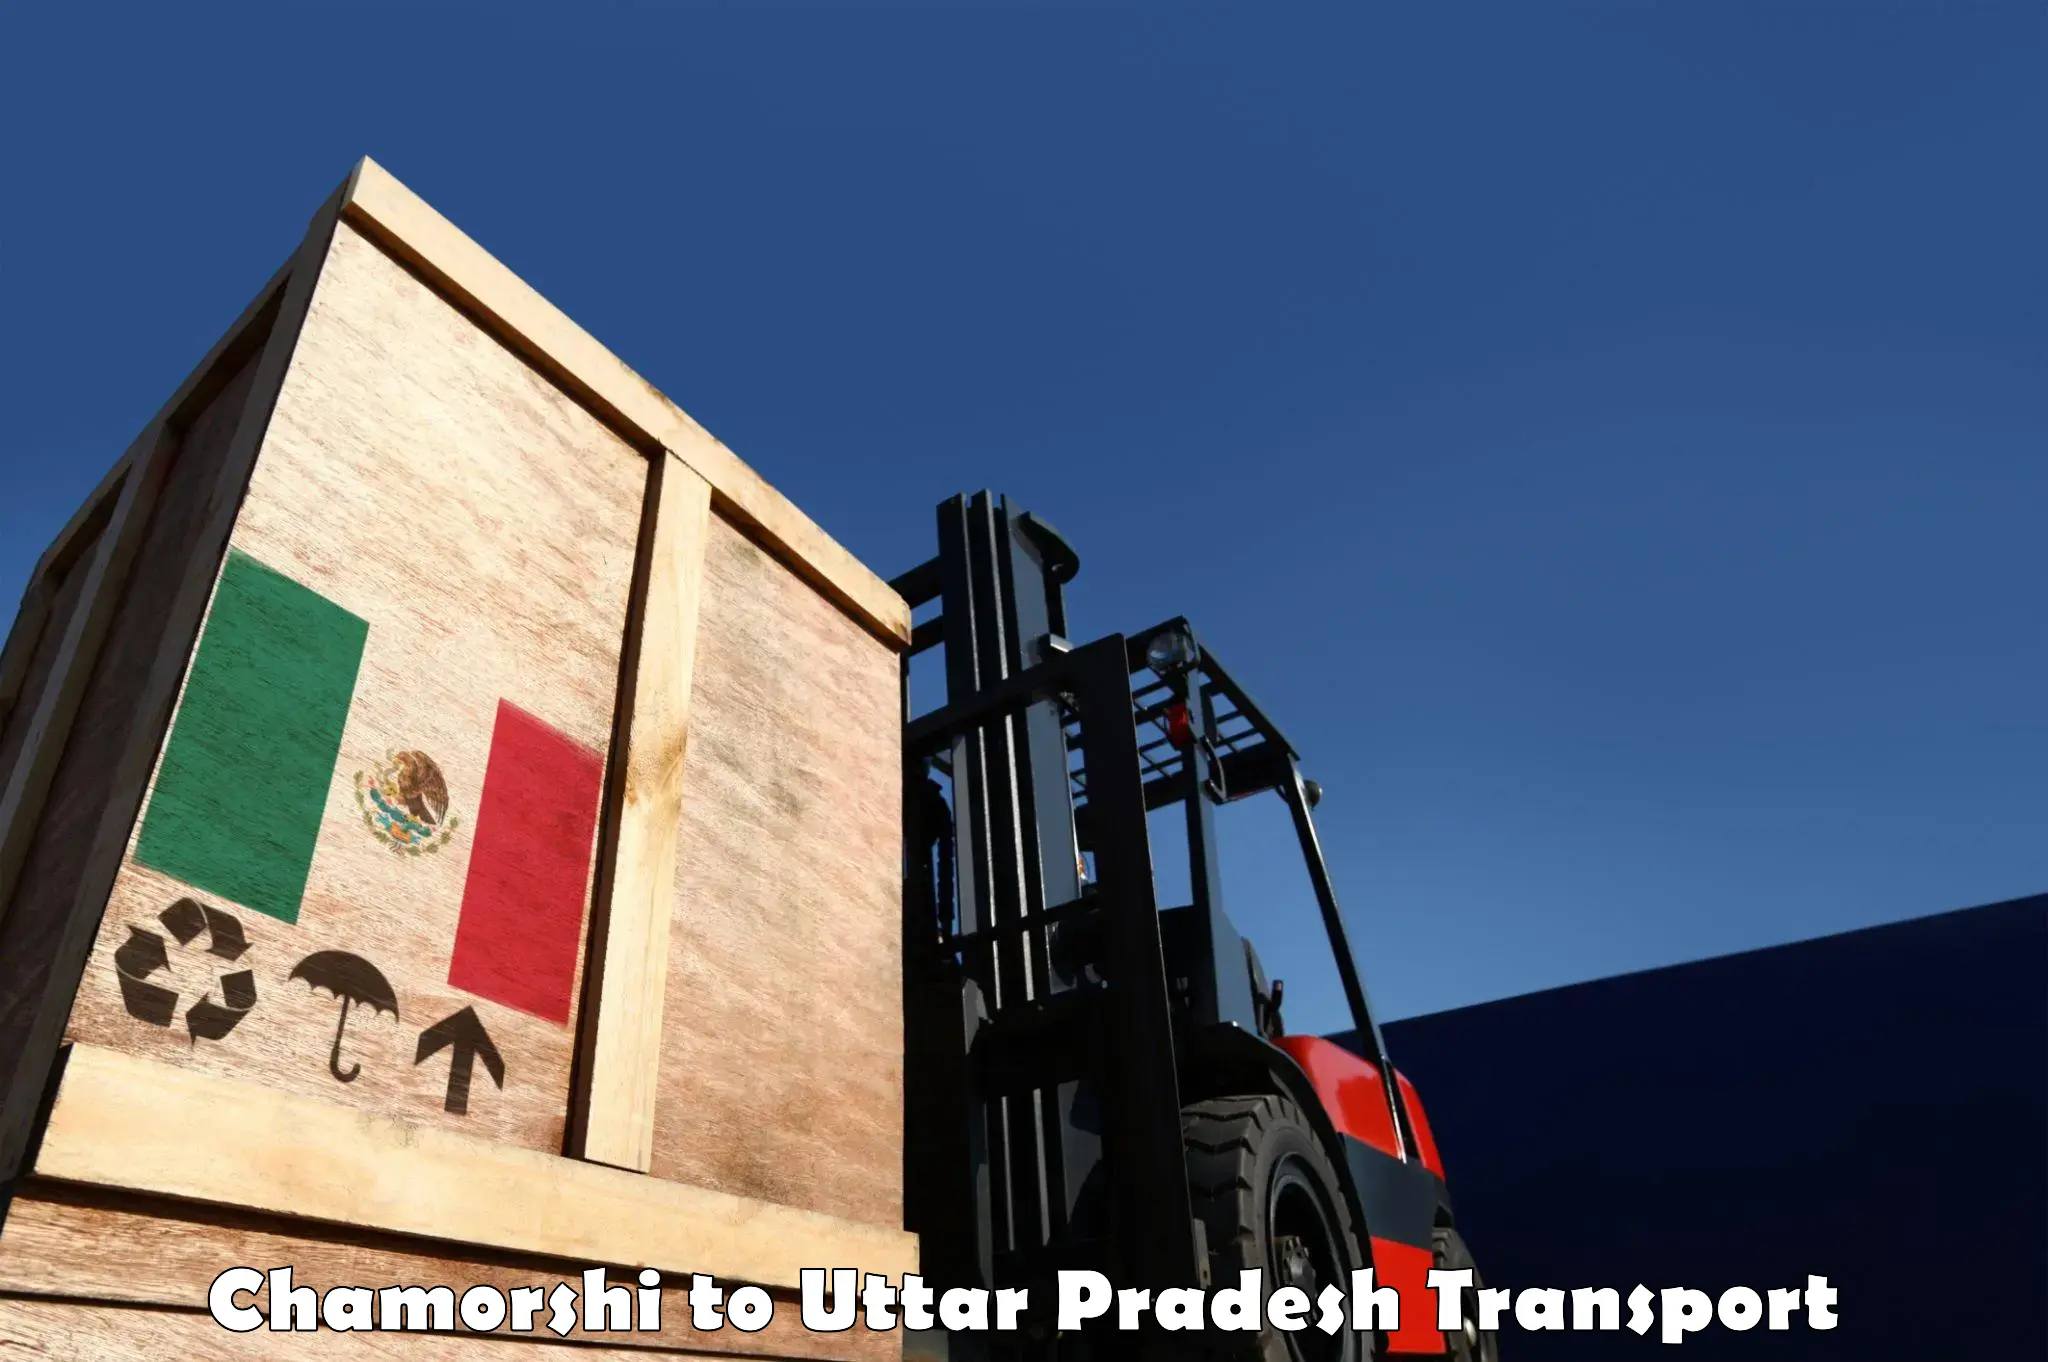 Transport in sharing Chamorshi to Noida